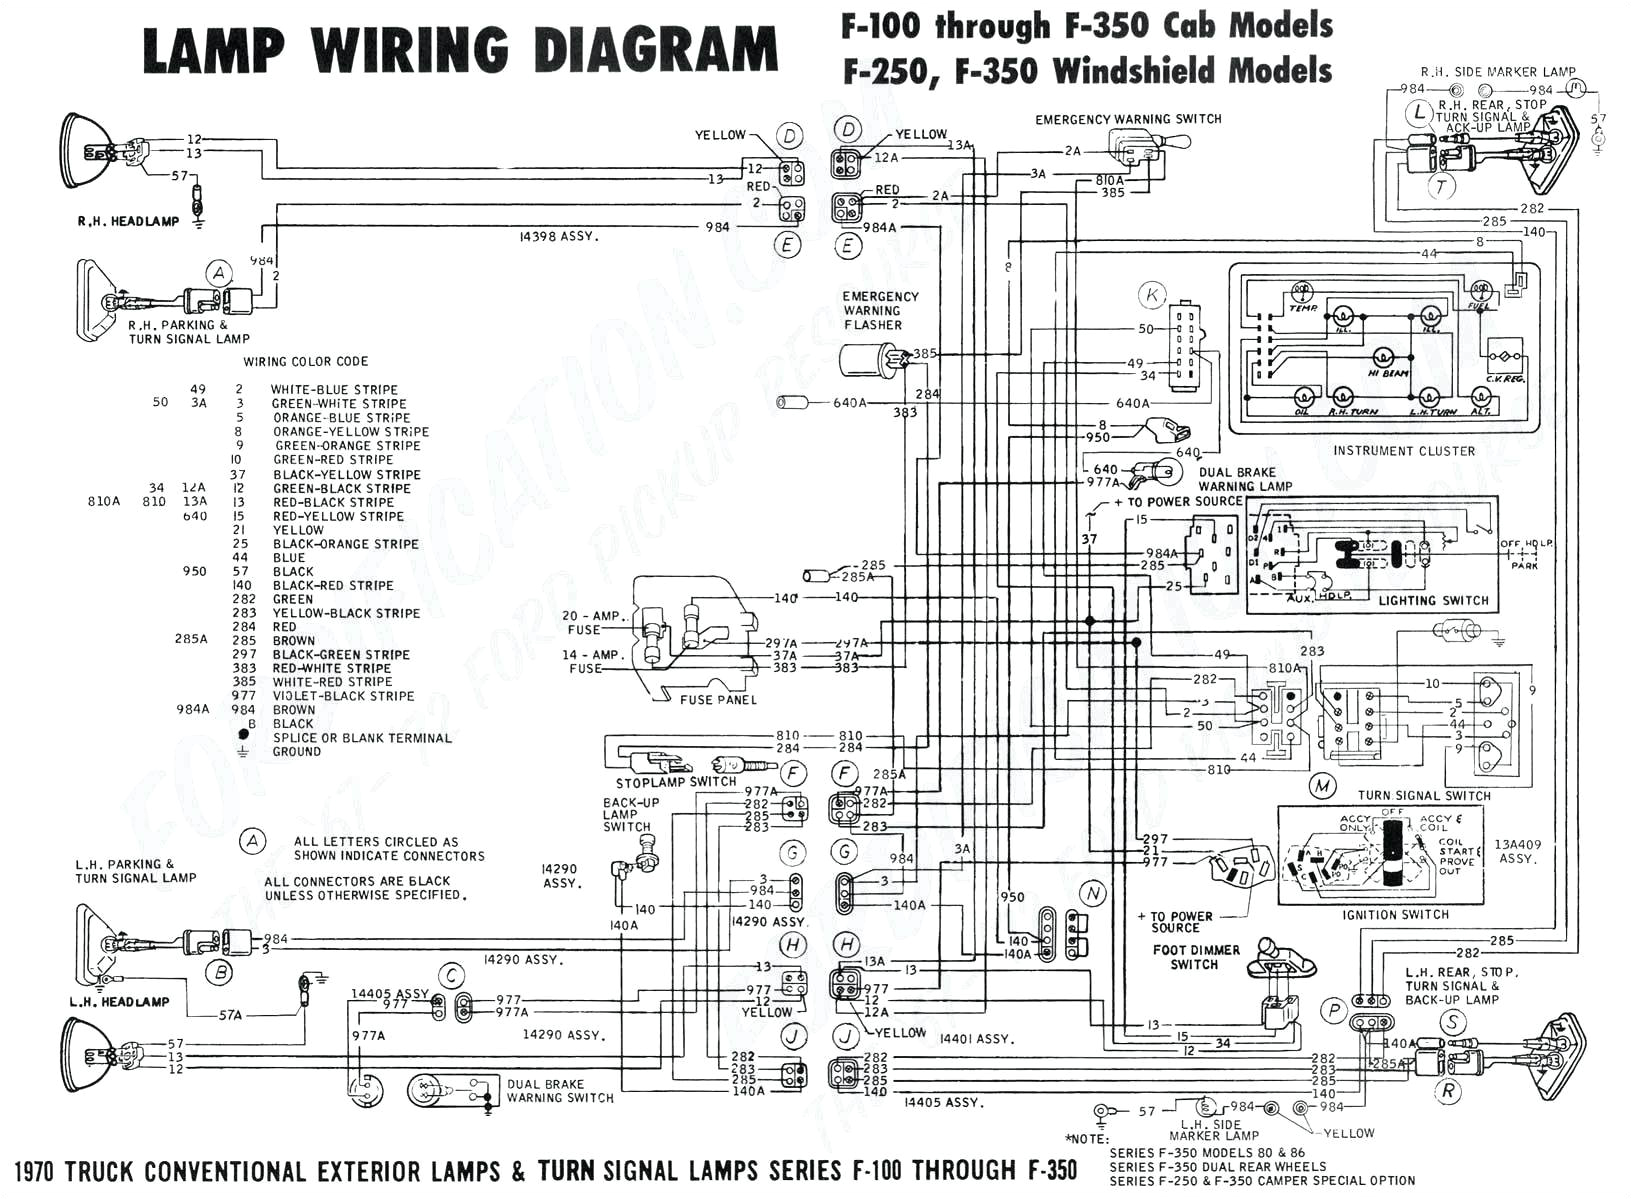 2007 chevy impala rear defogger wiring diagram free download 2008 chevy impala door lock wiring diagram free download